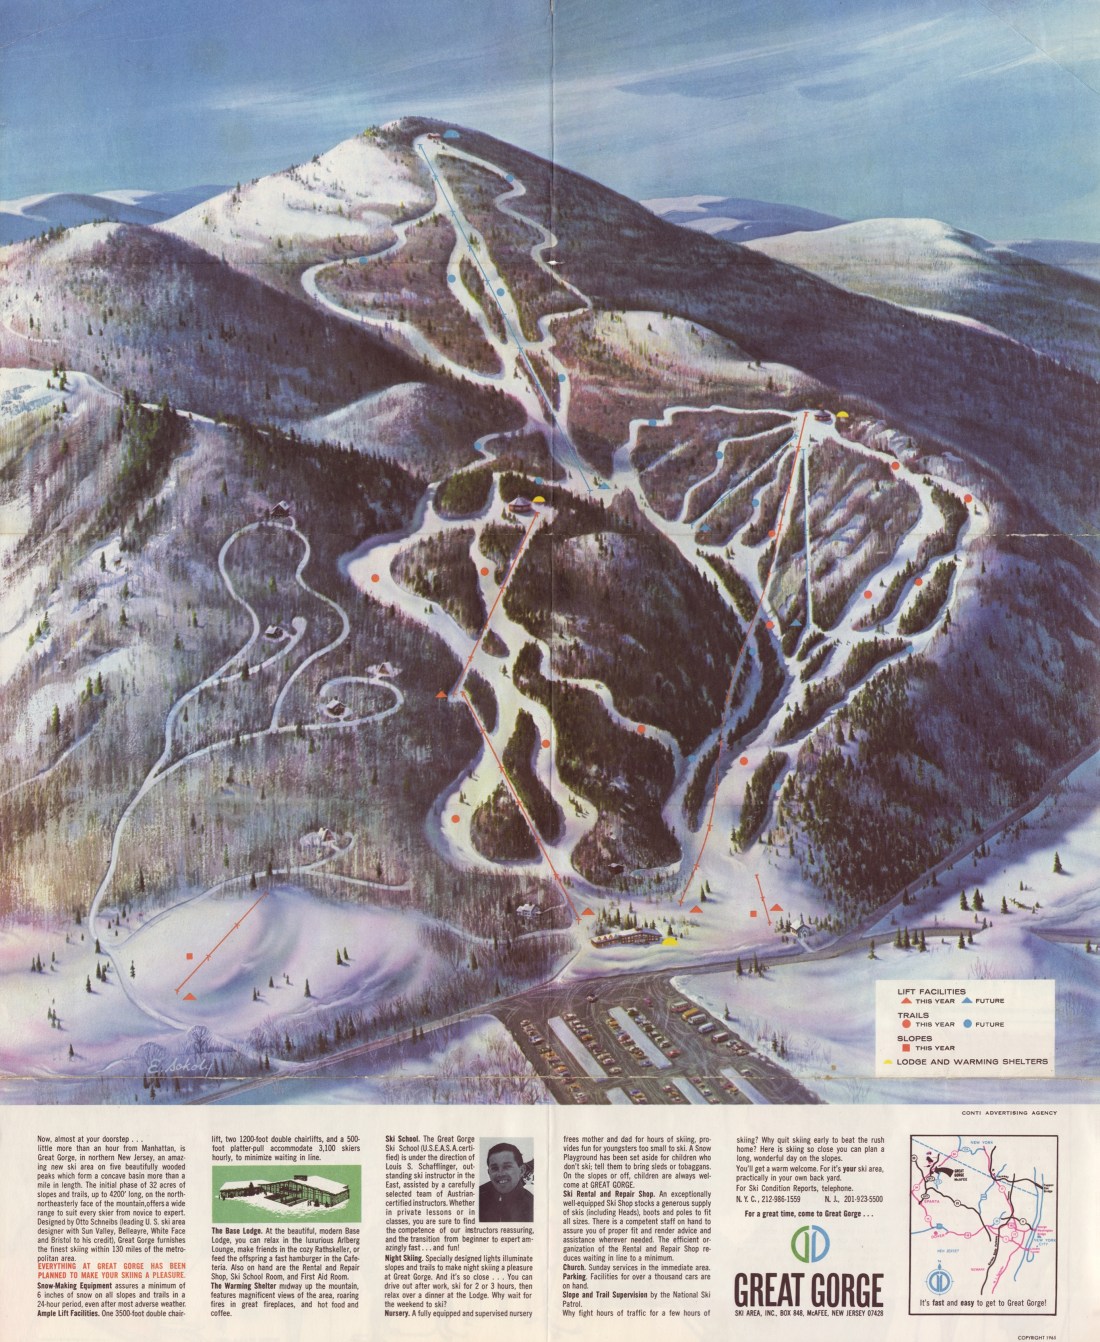 Original Great Gorge Plan - now known as South Peak